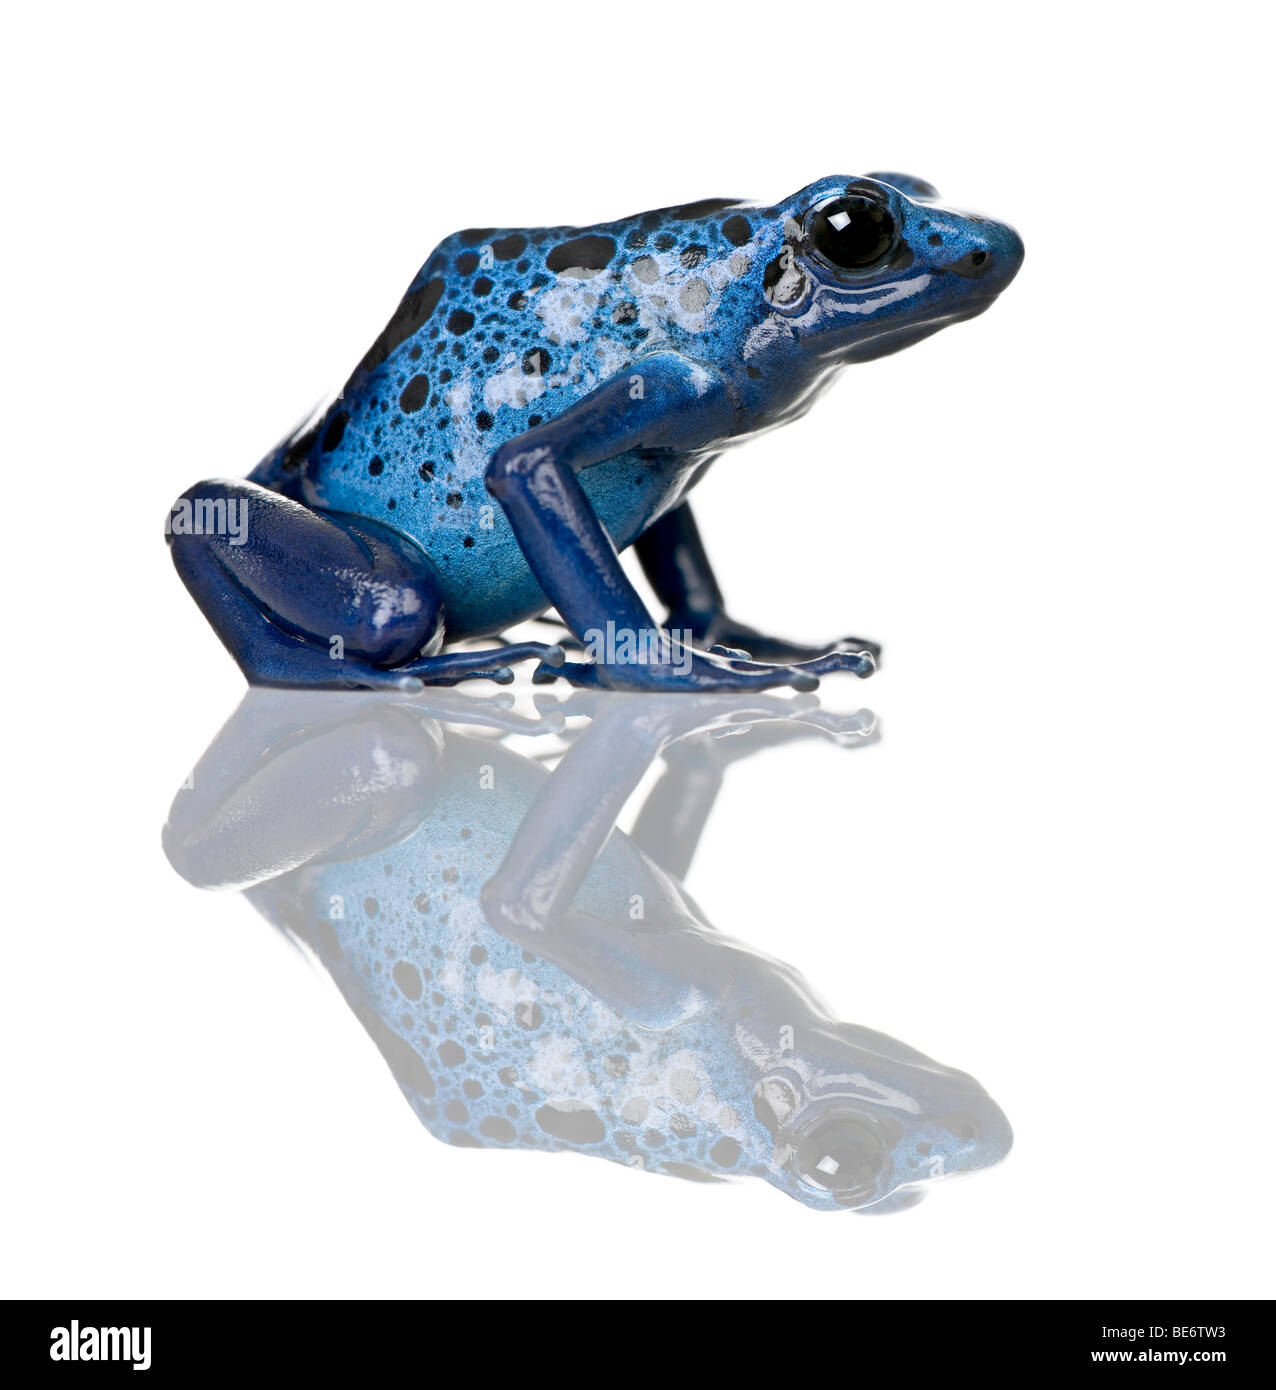 Blue Poison Dart frog, Dendrobates azureus, against white background, studio shot Stock Photo